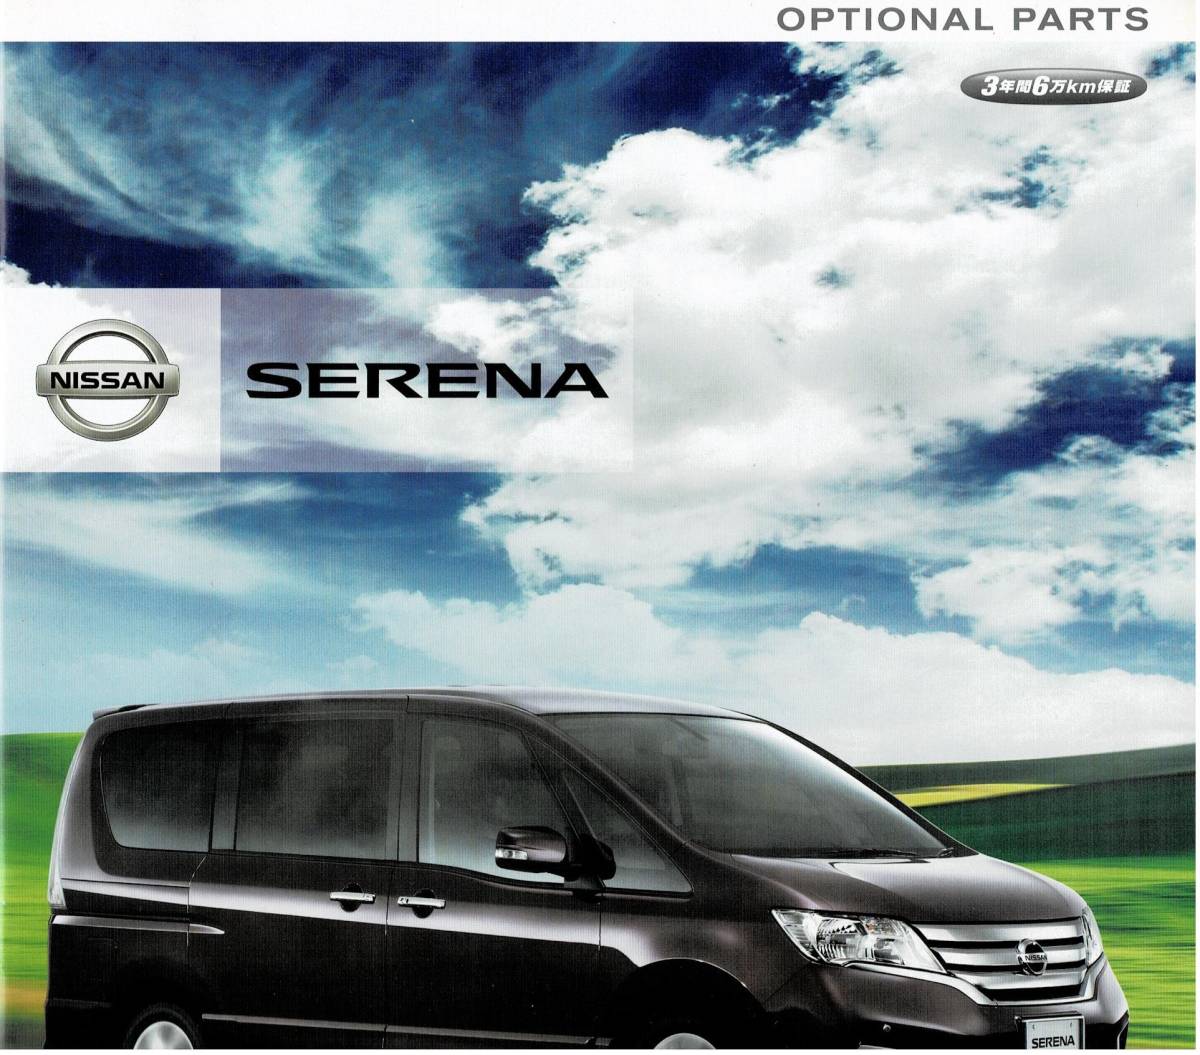  Nissan Serena catalog +OP SERENA